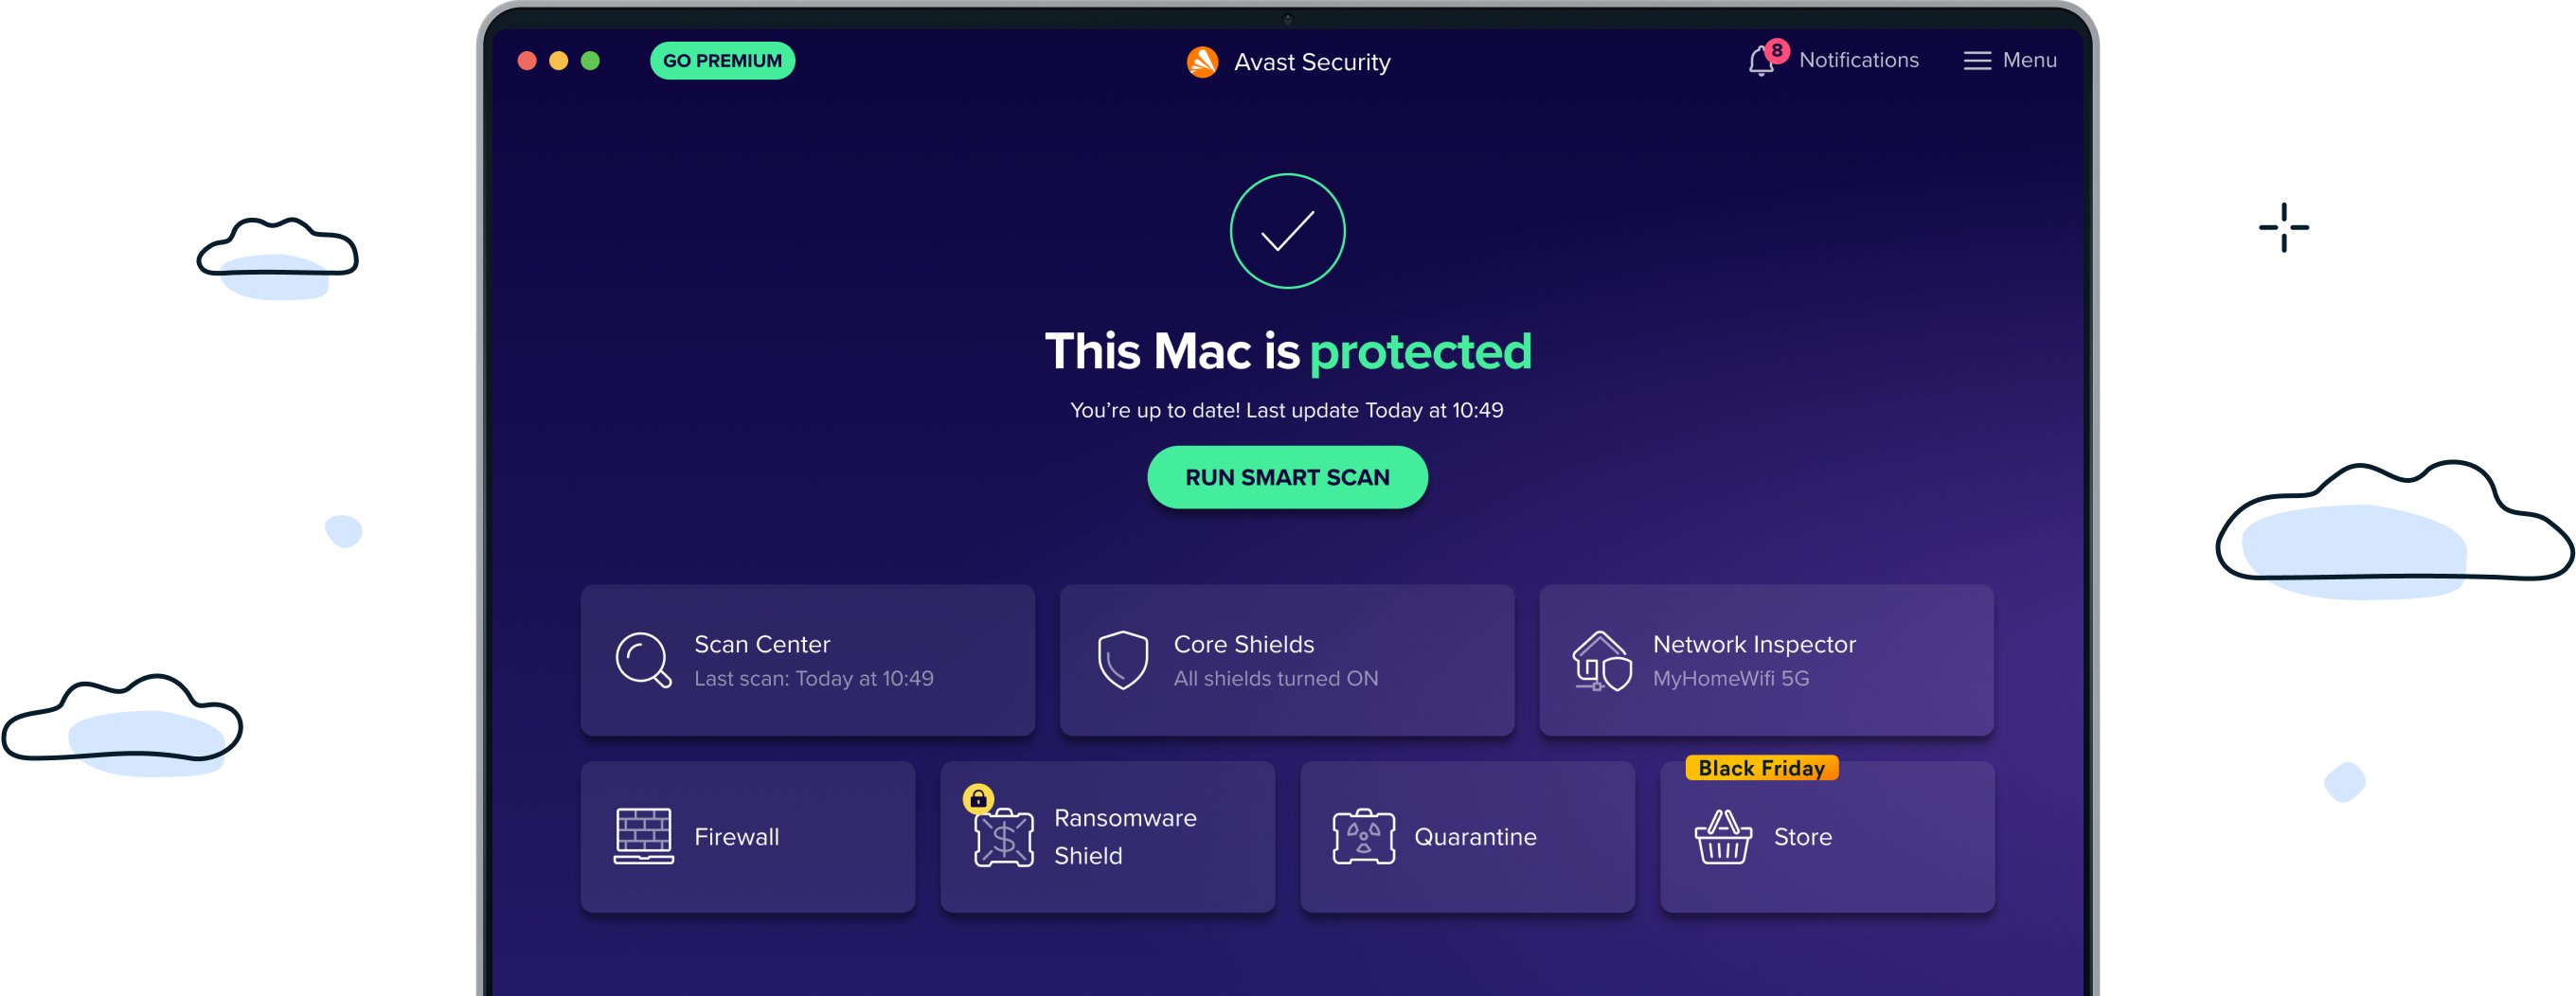 Download Free Antivirus for Mac, Free Mac Virus Scan